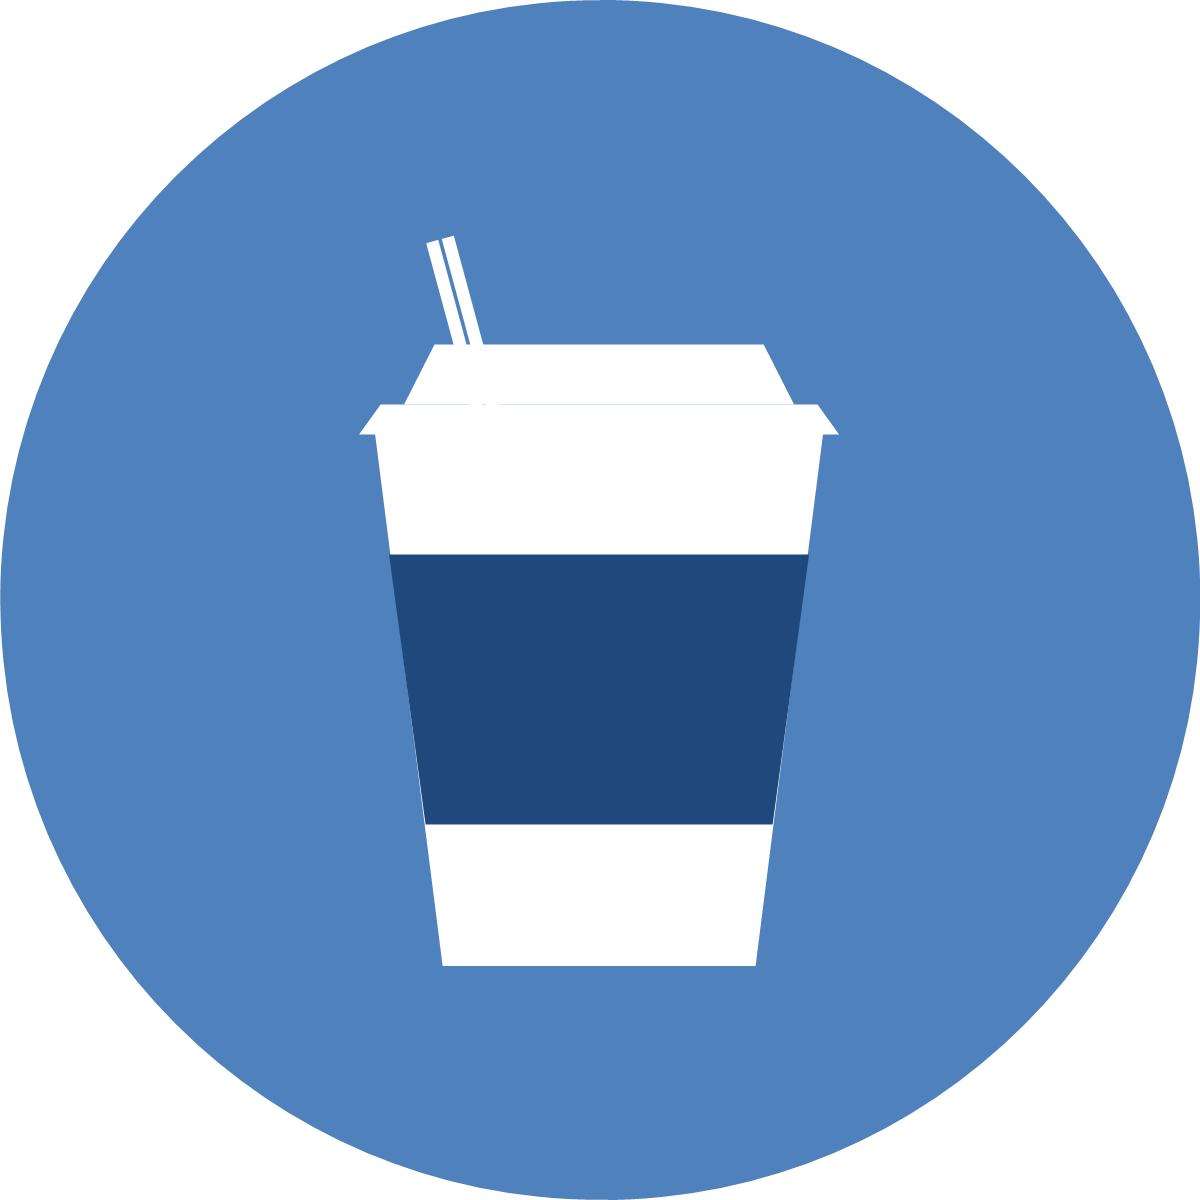 Skip The Stirrer - Caffeinated Drink (1200x1200)